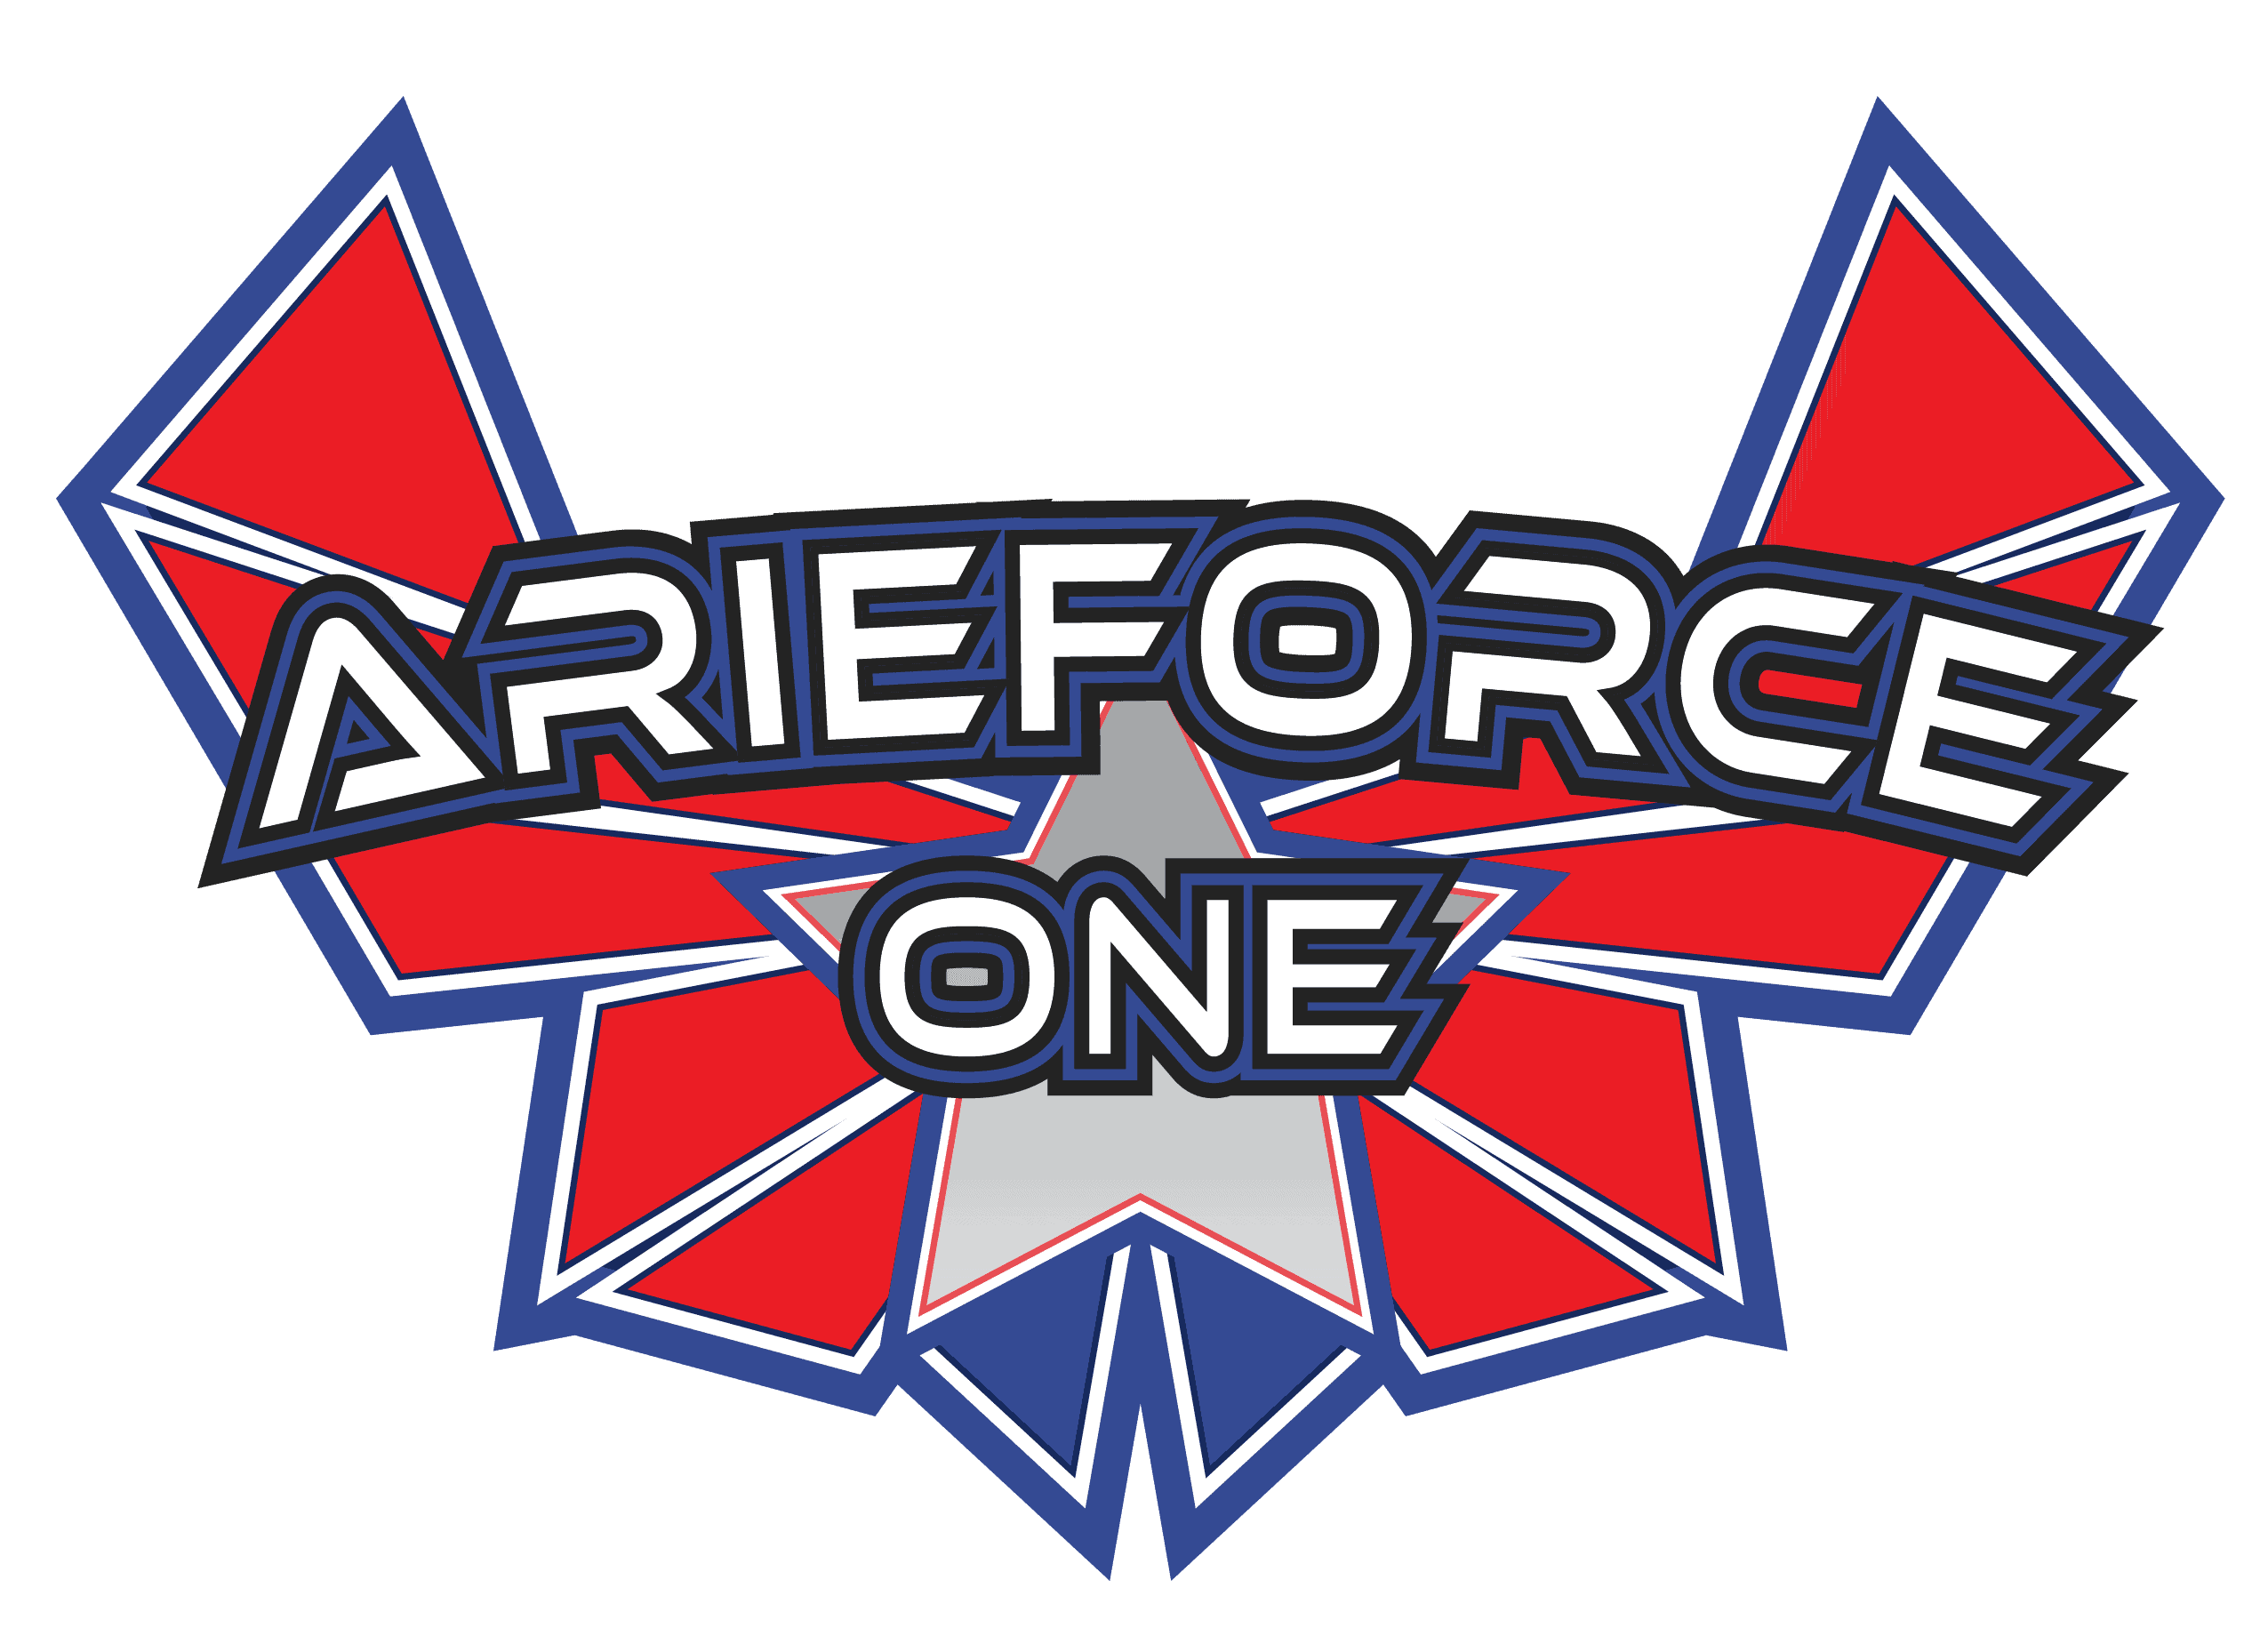 ArieForce One logo